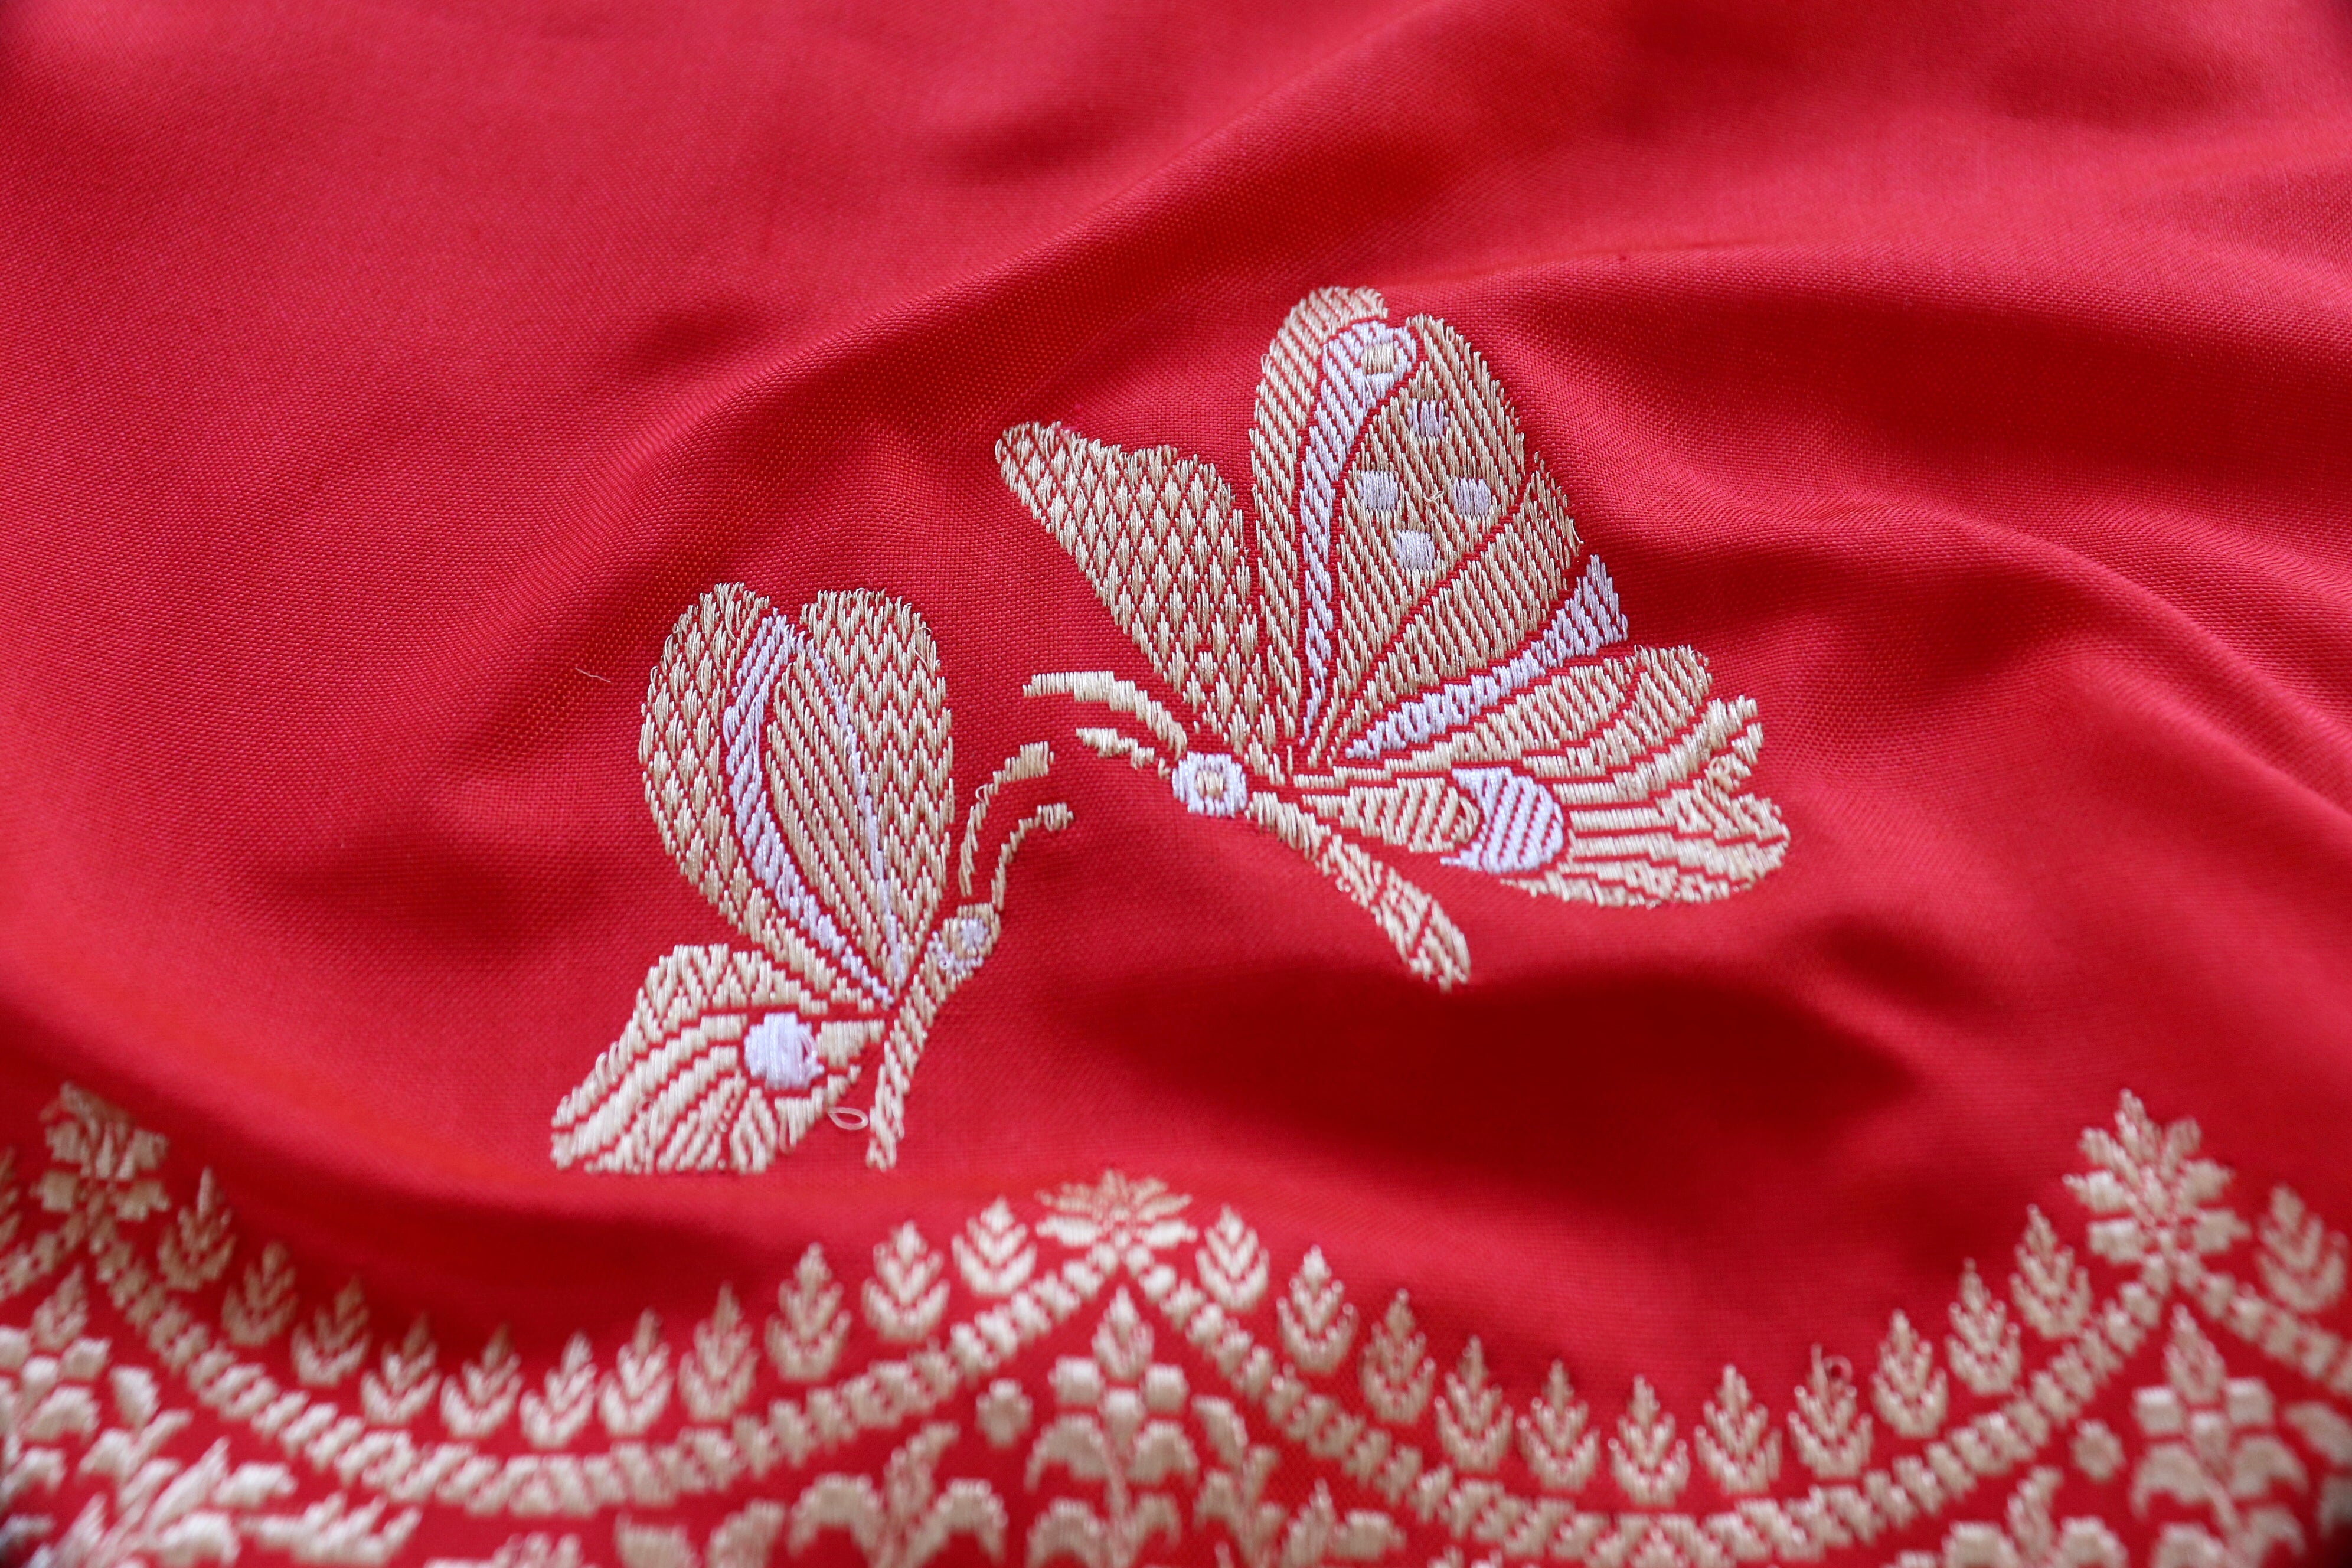 Red Butterfly Motif Handwoven Banarasi Silk Saree